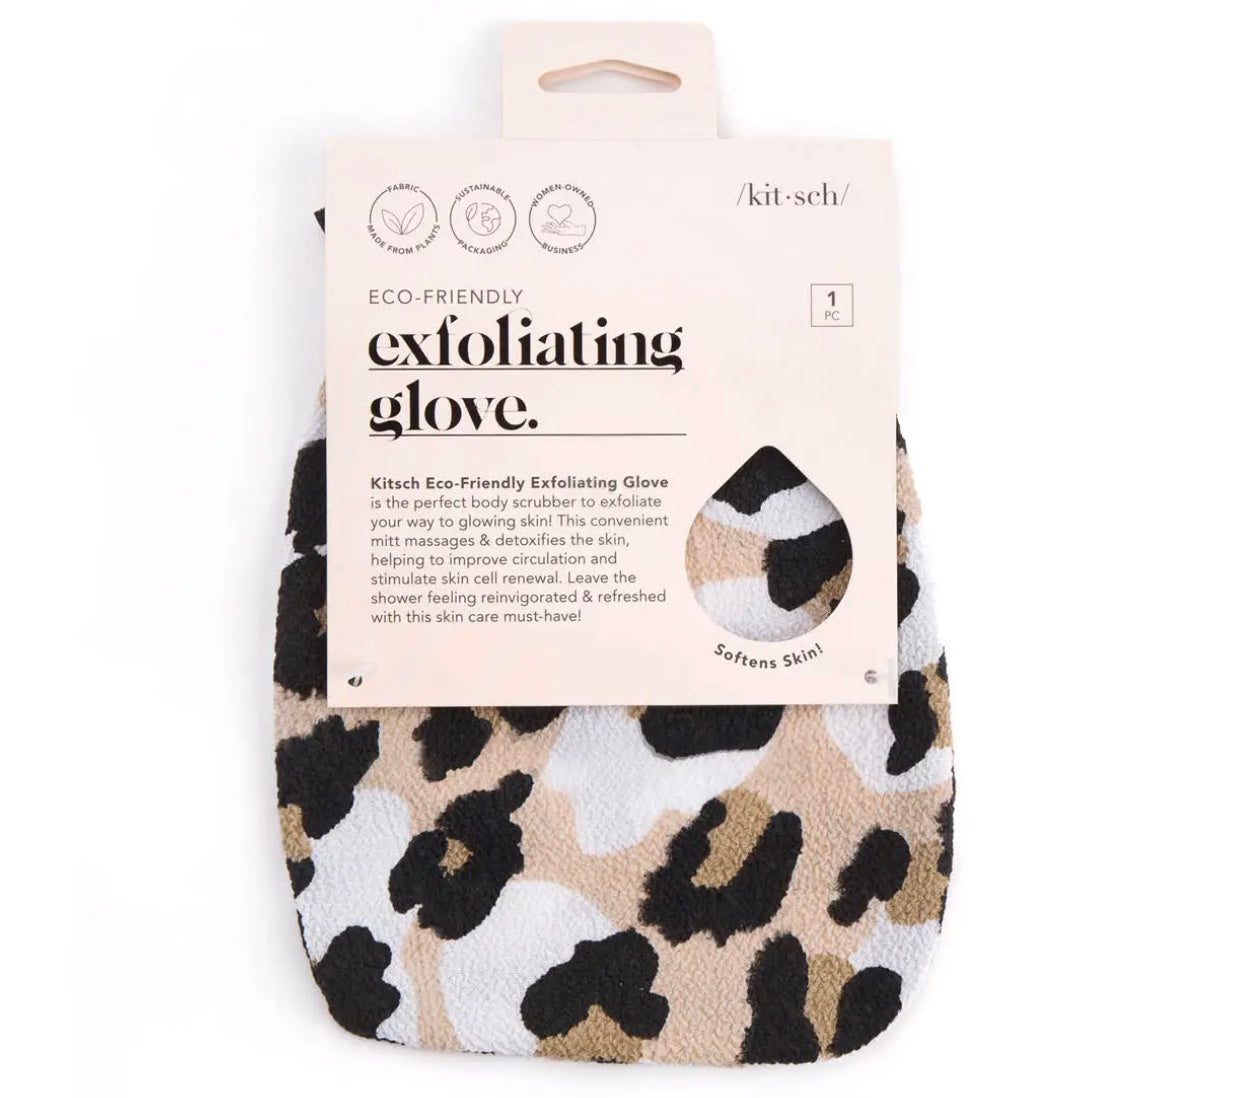 Leopard Print Exfoliating Body Glove by Kitsch